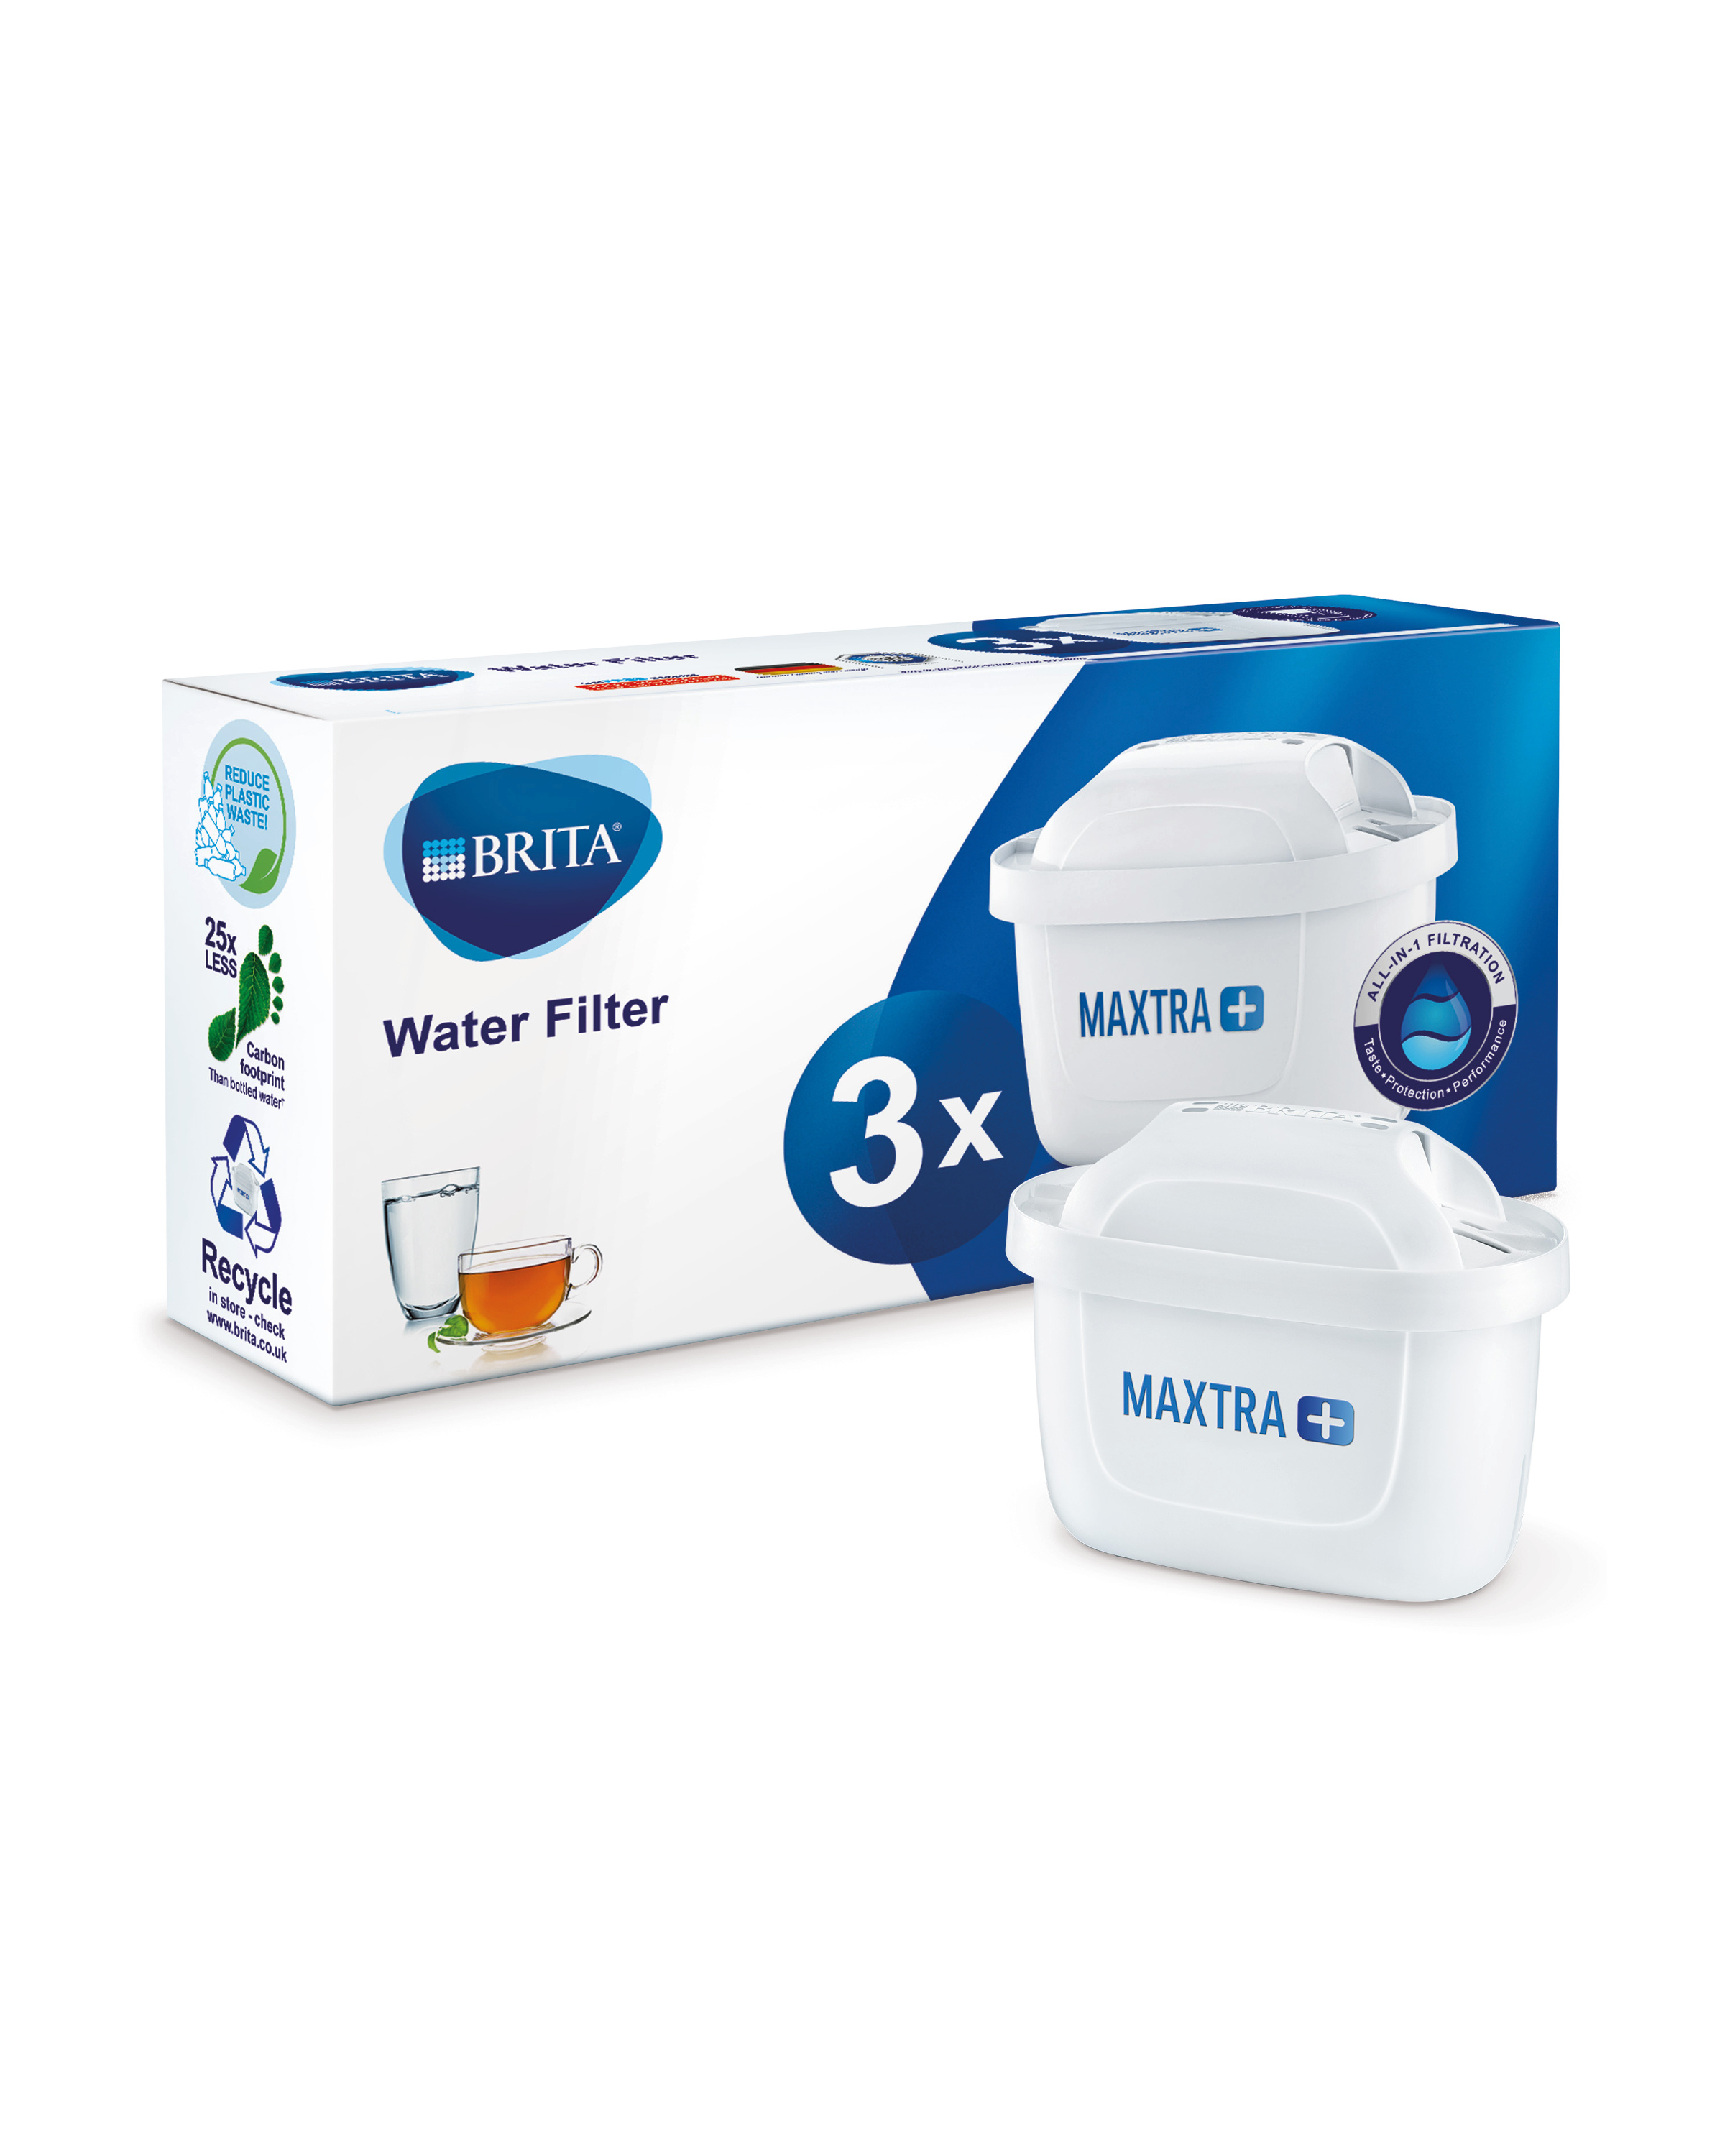 Creatie tieners ijsje Brita Filter Cartridge Maxtra 3 Pack - ALDI UK